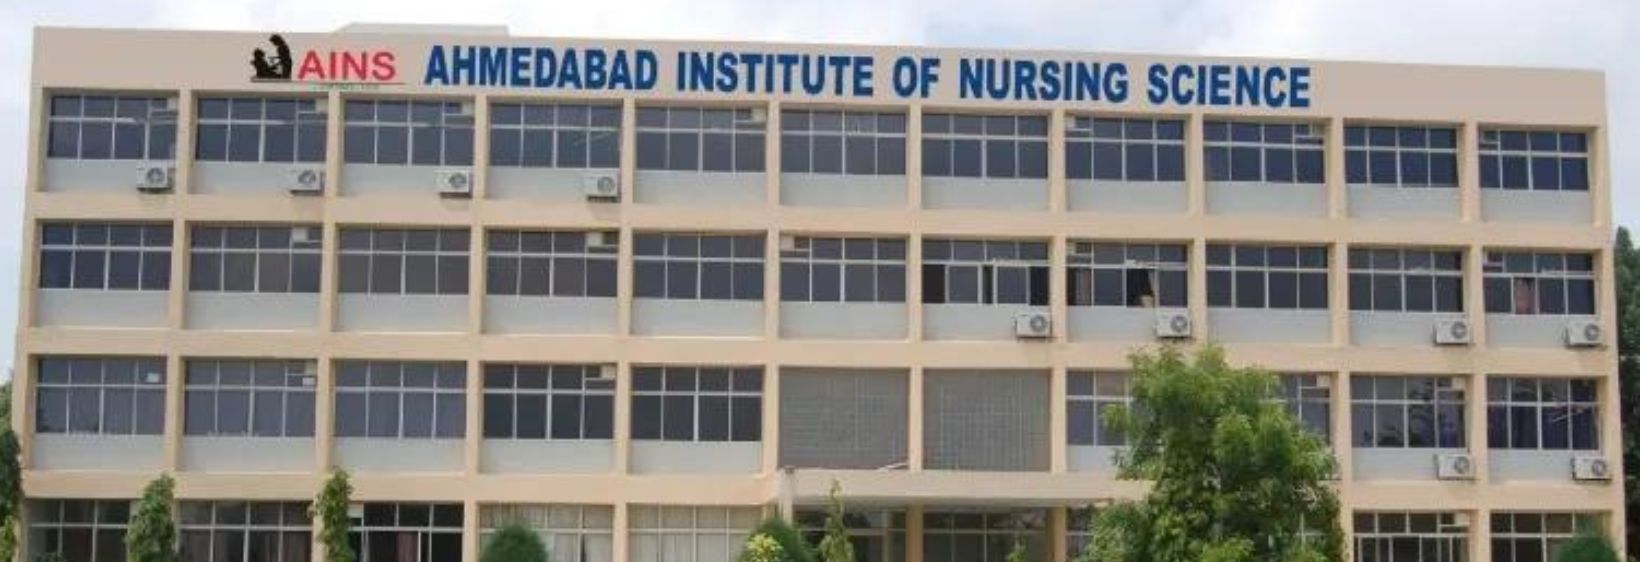 Ahmedabad Institute of Nursing Science - Ahmedabad